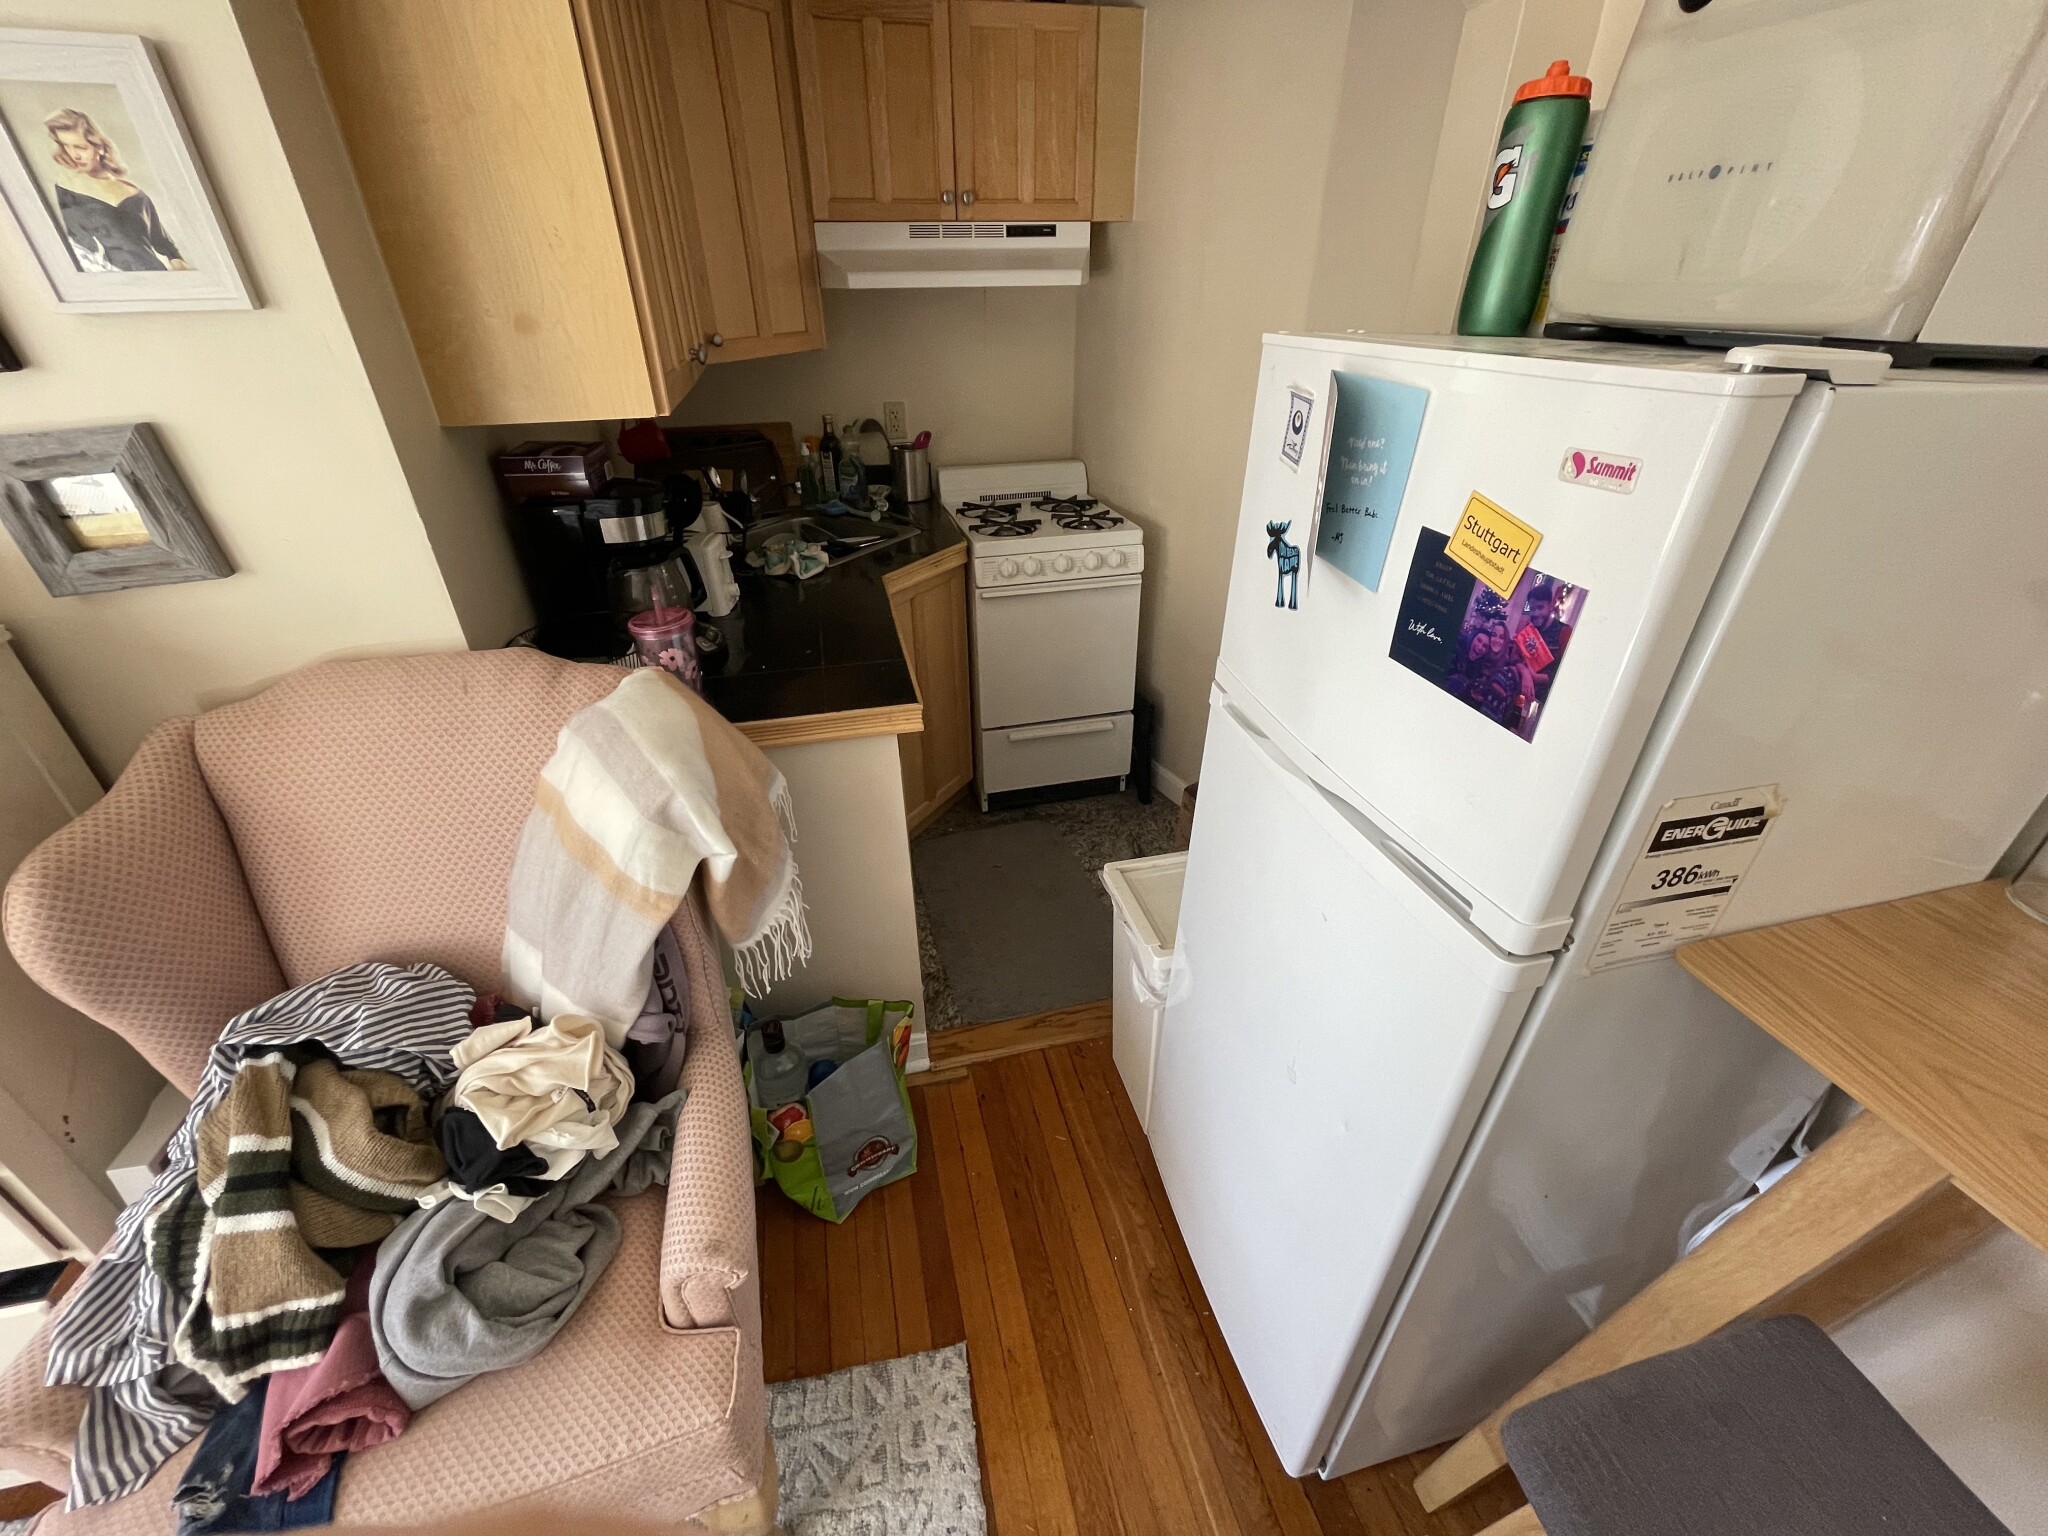 Photos of apartment on Hemenway St.,Boston MA 02115